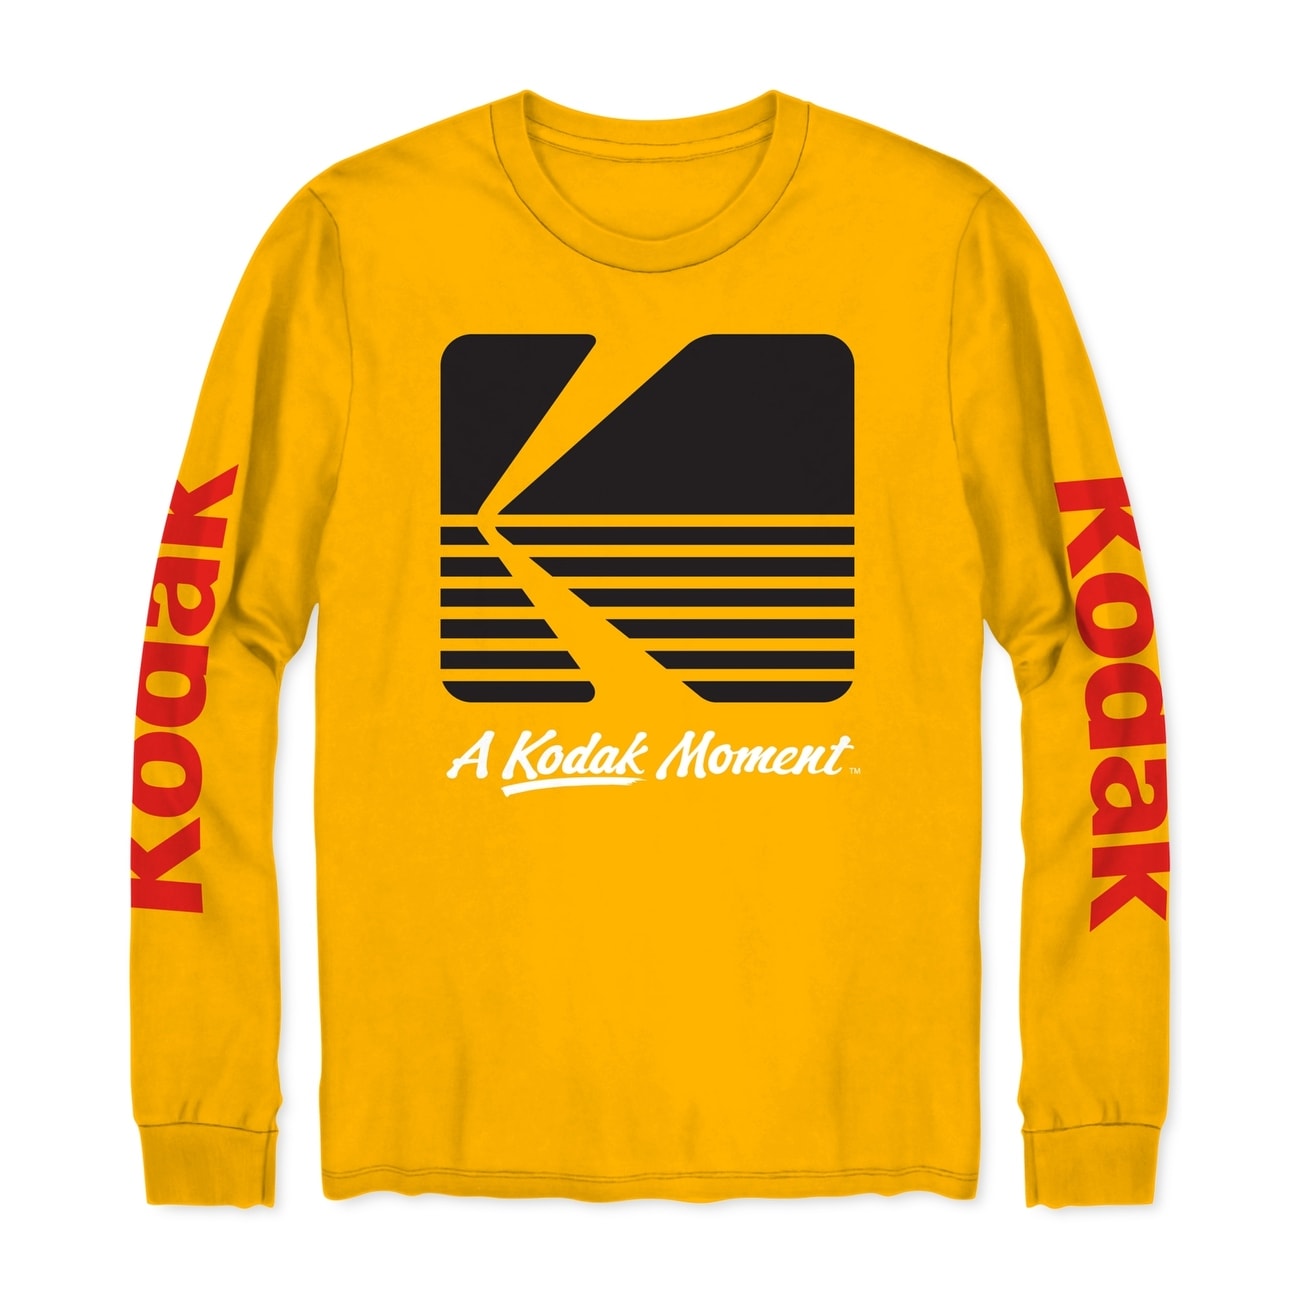 Kodak Men's T-Shirt Gold Yellow Size XL Logo Graphic Crewneck Tee